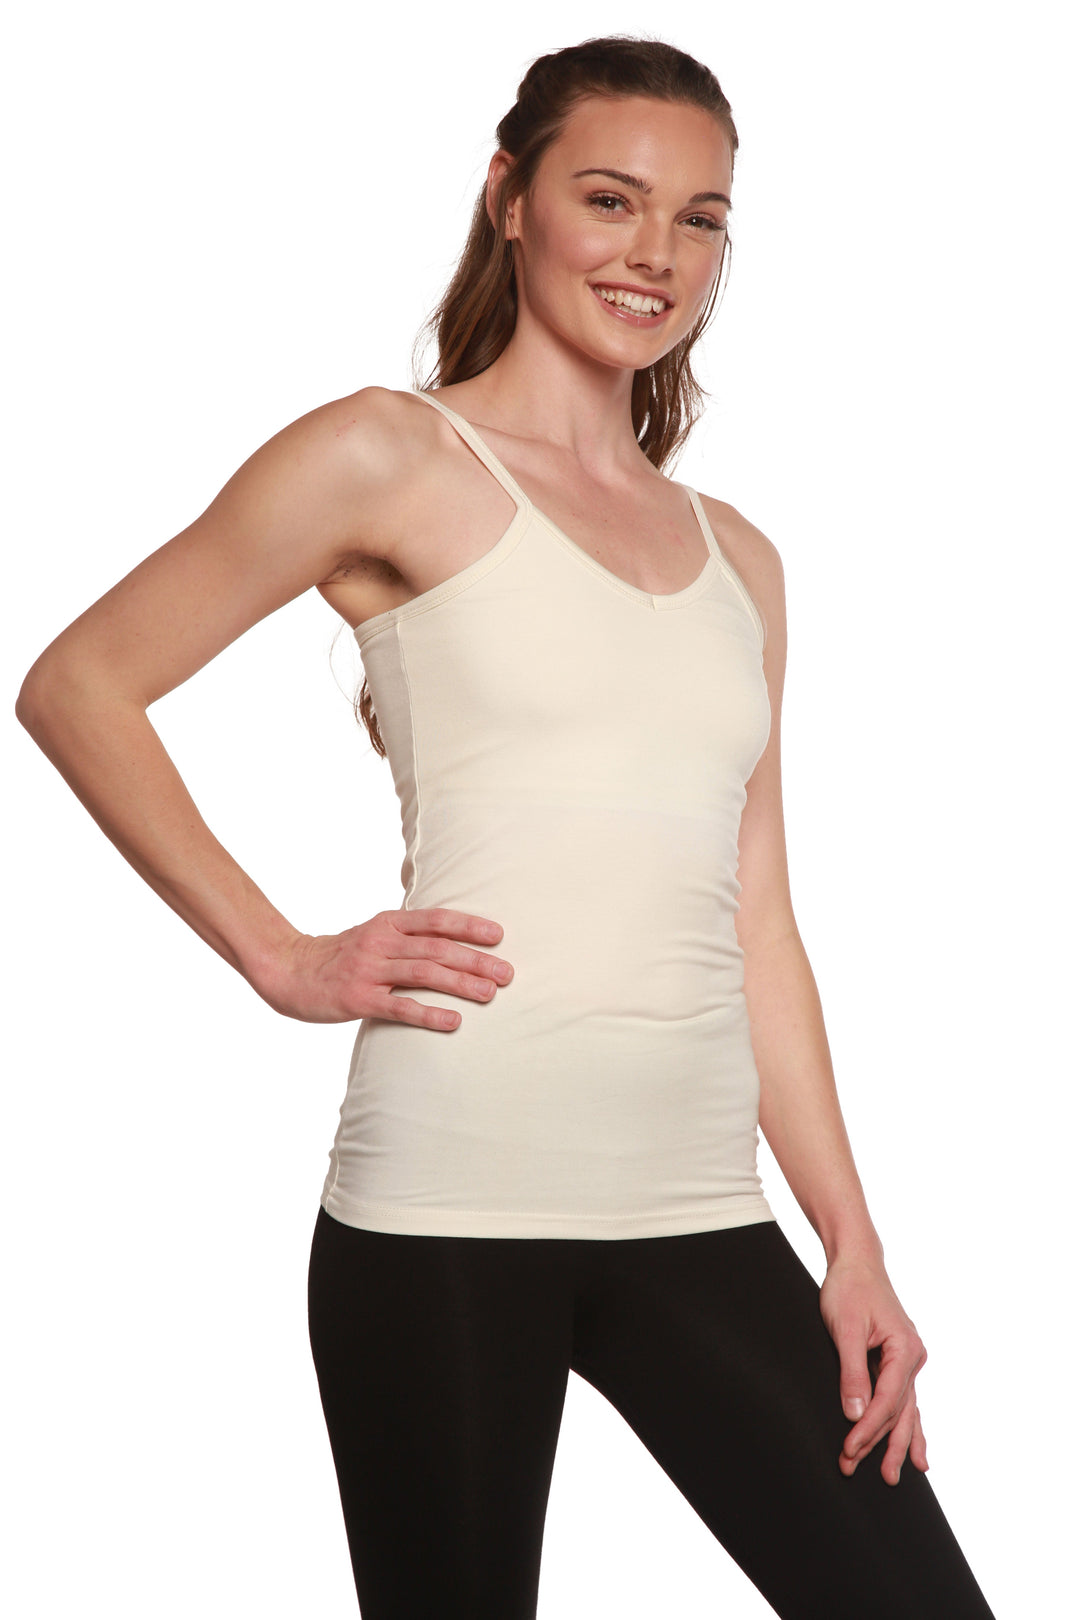 Women's Organic Cotton Camisole Tank Top with Built-in Shelf Bra 